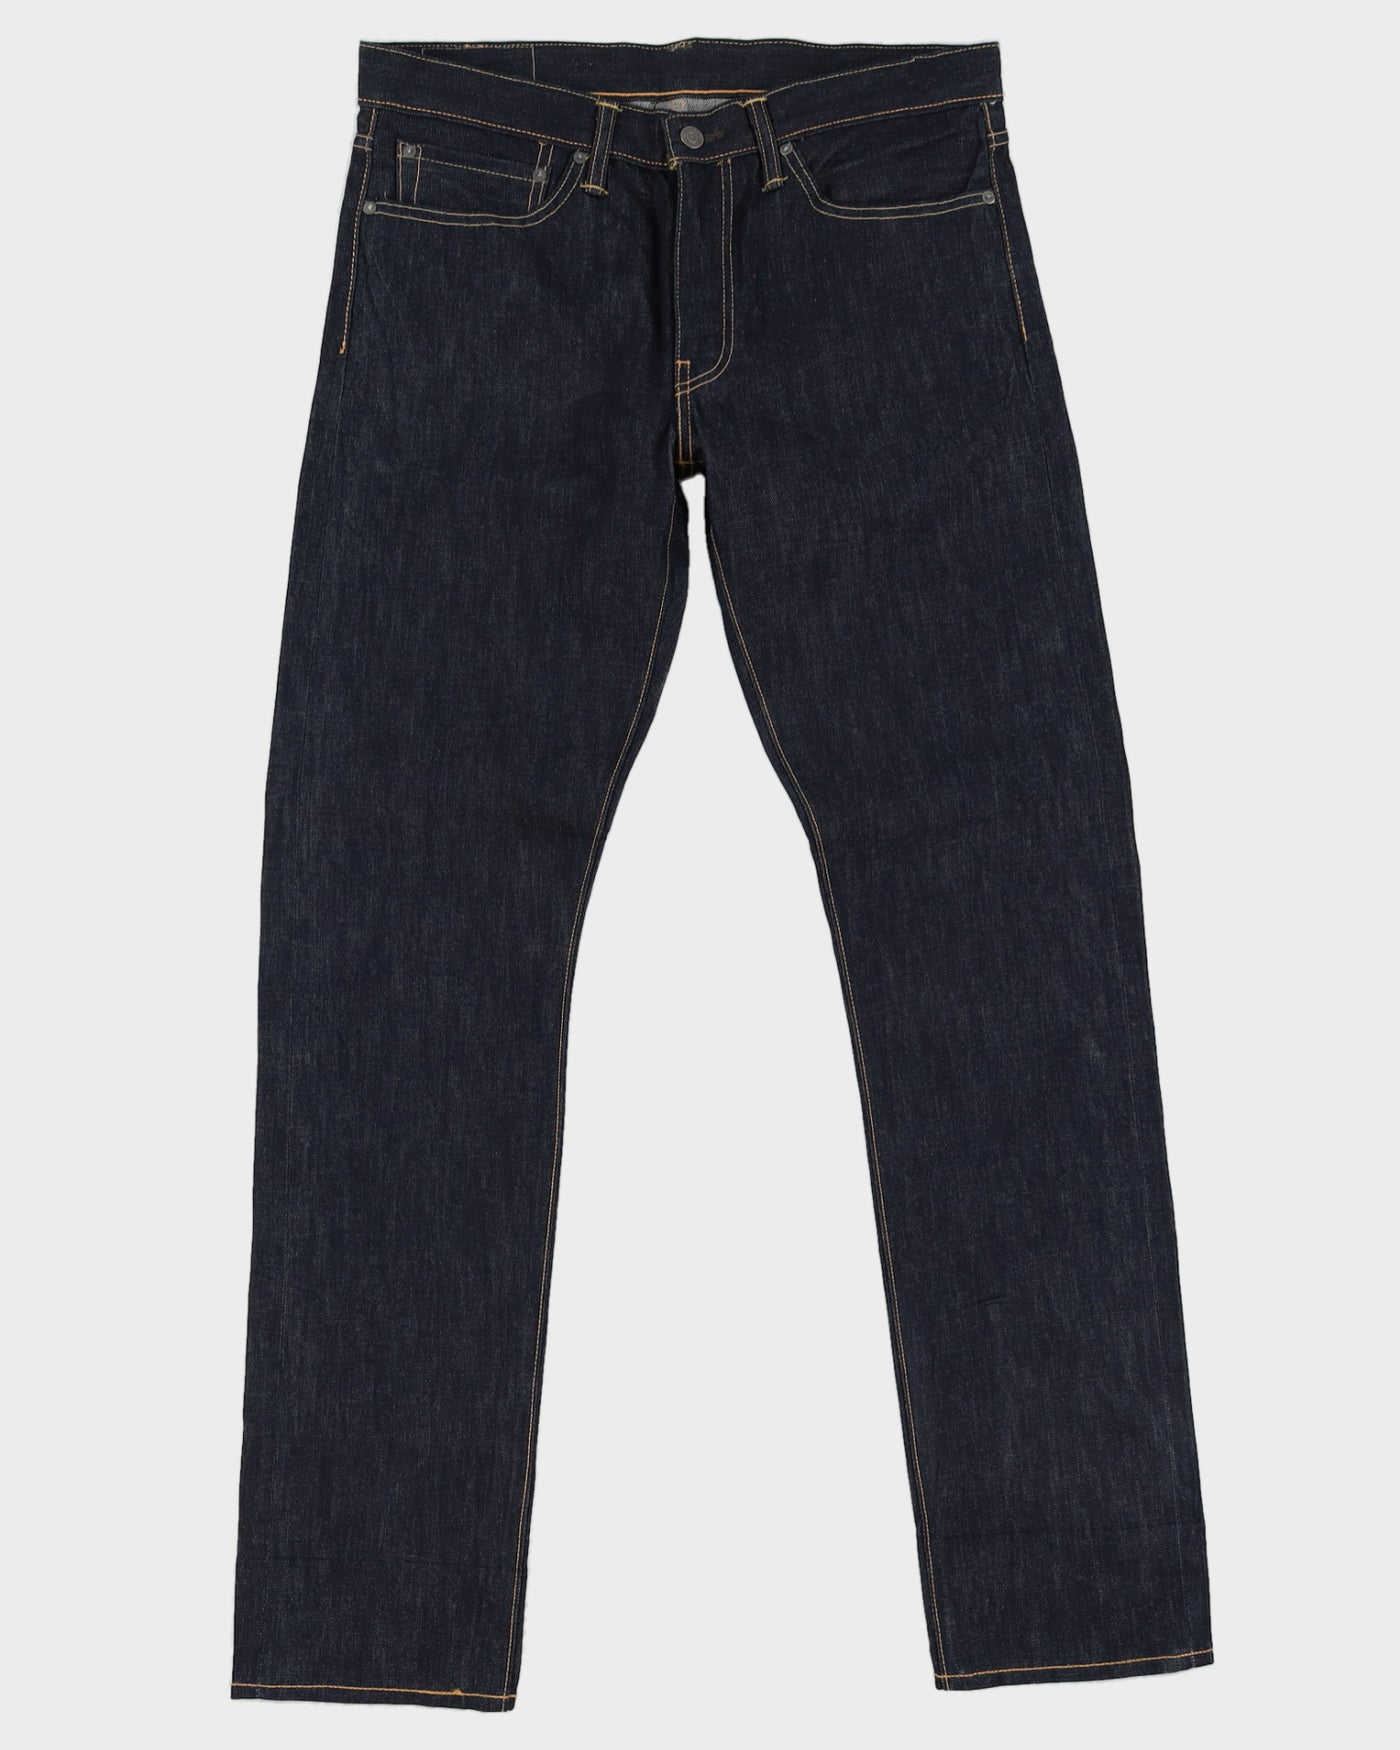 Levi's 511 Blue Dark Washed Jeans - W34 L34